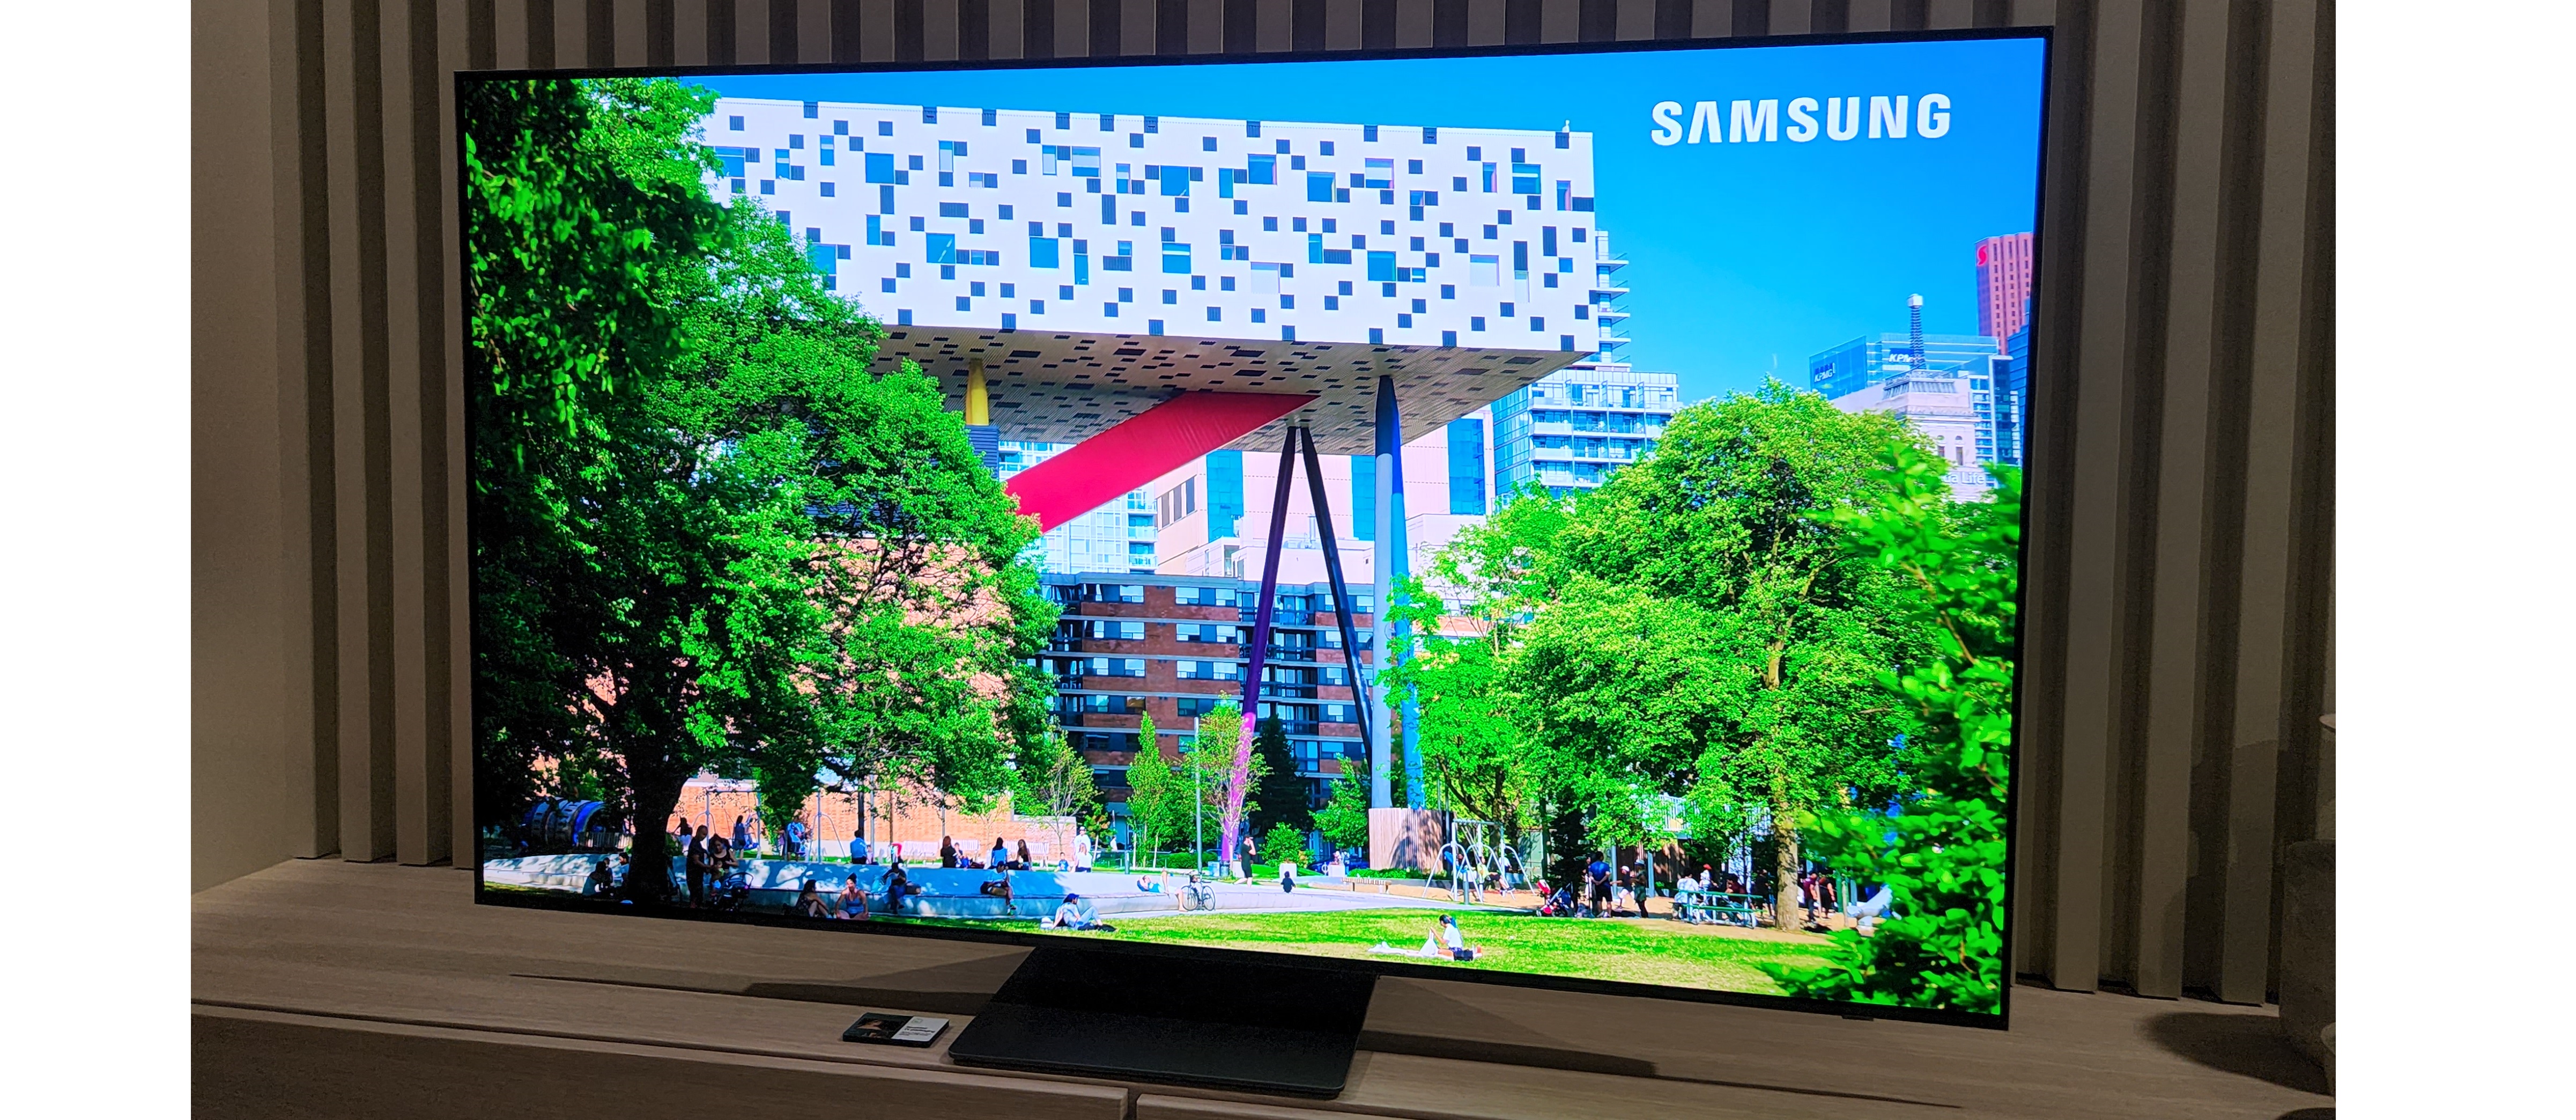 Samsung berhenti membuat layar LCD, yang merupakan kabar baik untuk TV QD-OLED yang lebih murah